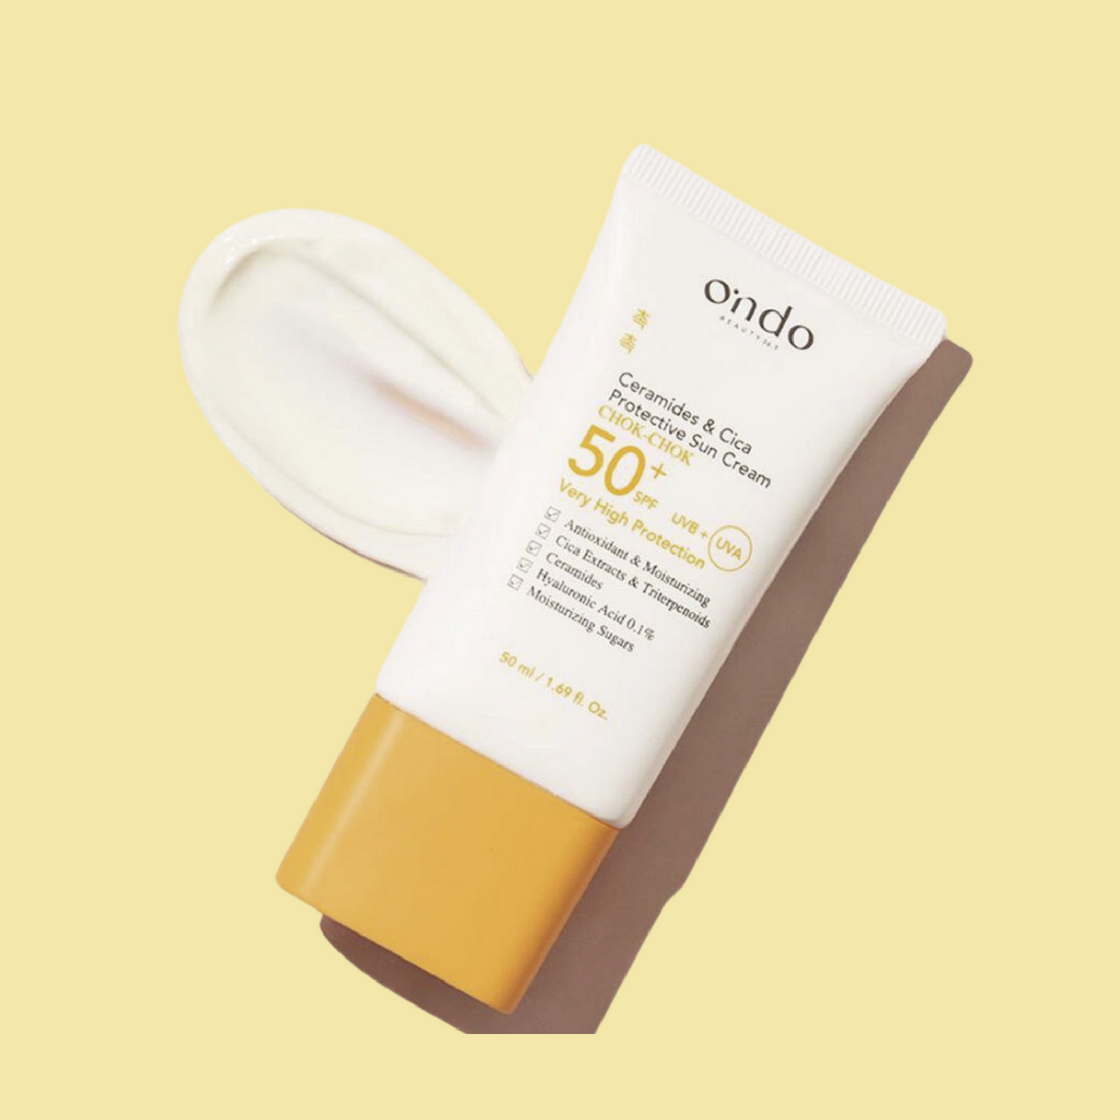 Ondo | Ceramides & Cica protective Sun Cream